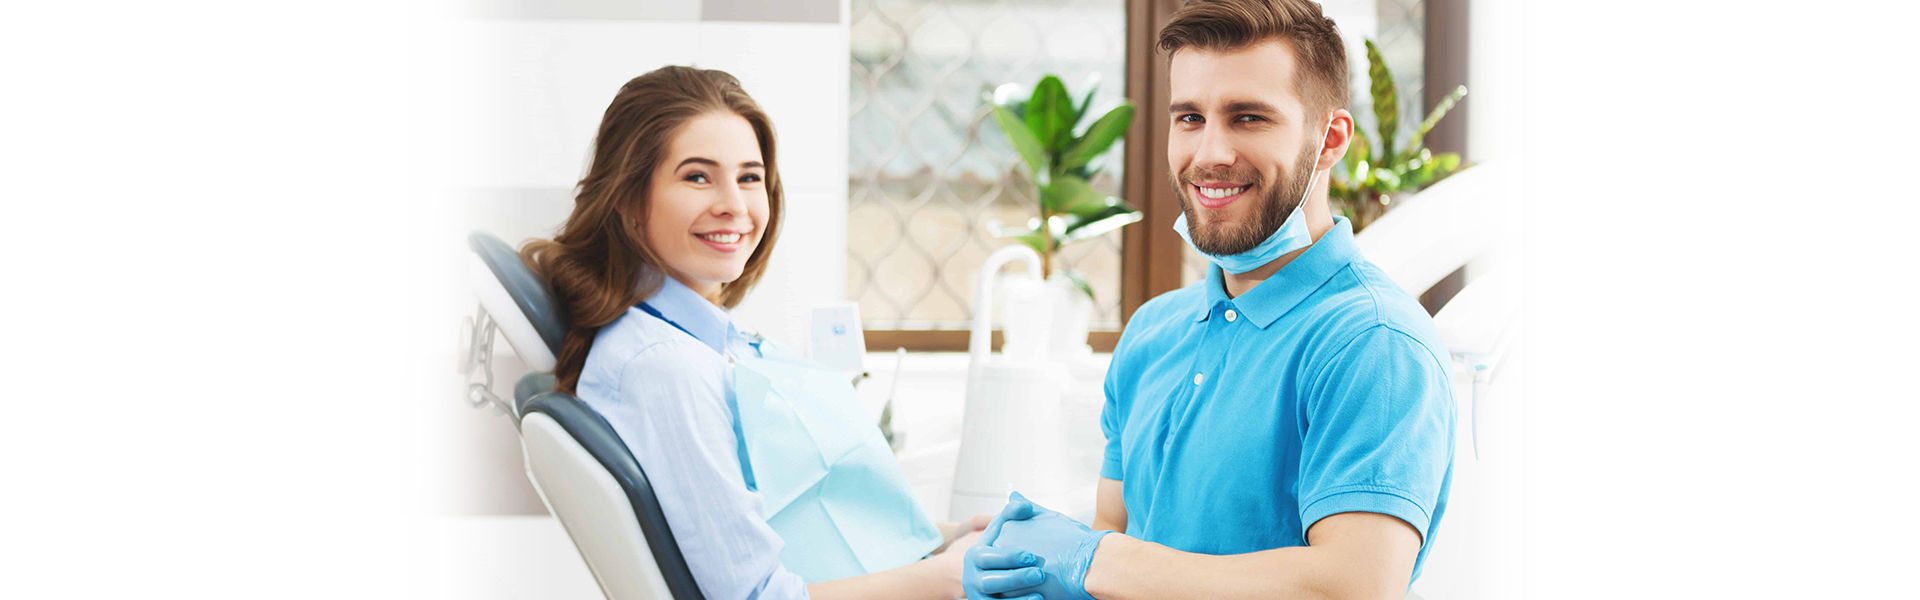 Holistic Dentist in San Diego Specializes in Mercury Free Dentistry